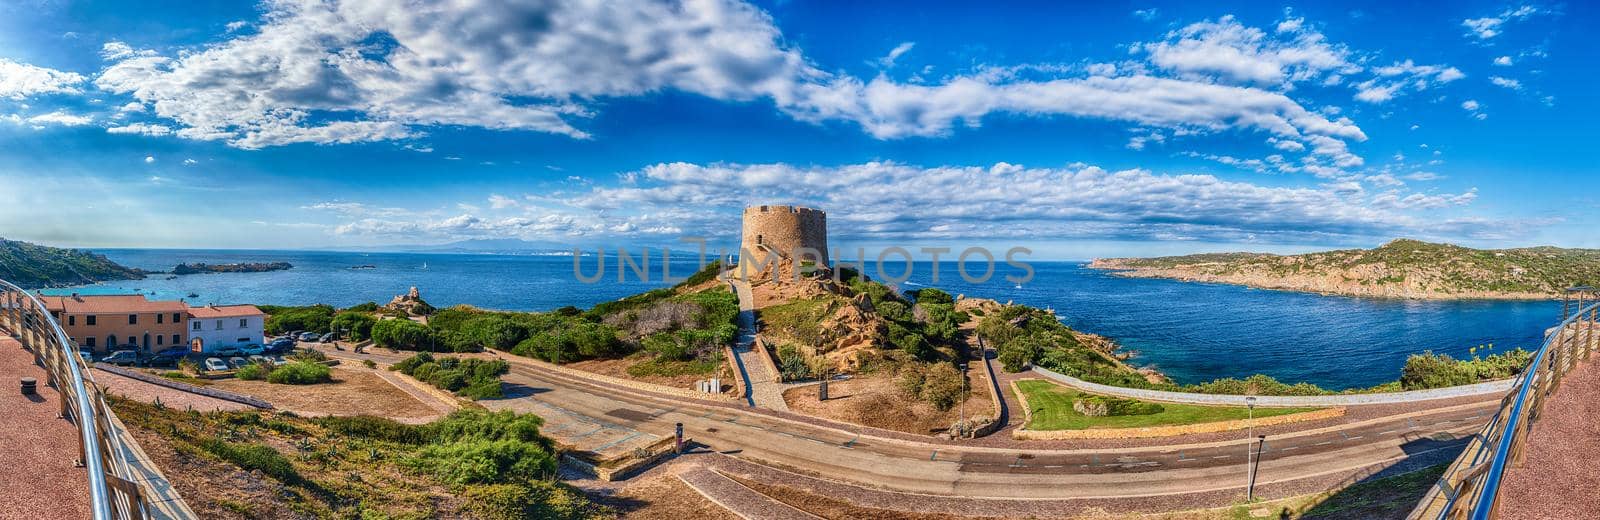 Longonsardo tower, iconic landmark in Santa Teresa Gallura, Sardinia, Italy by marcorubino